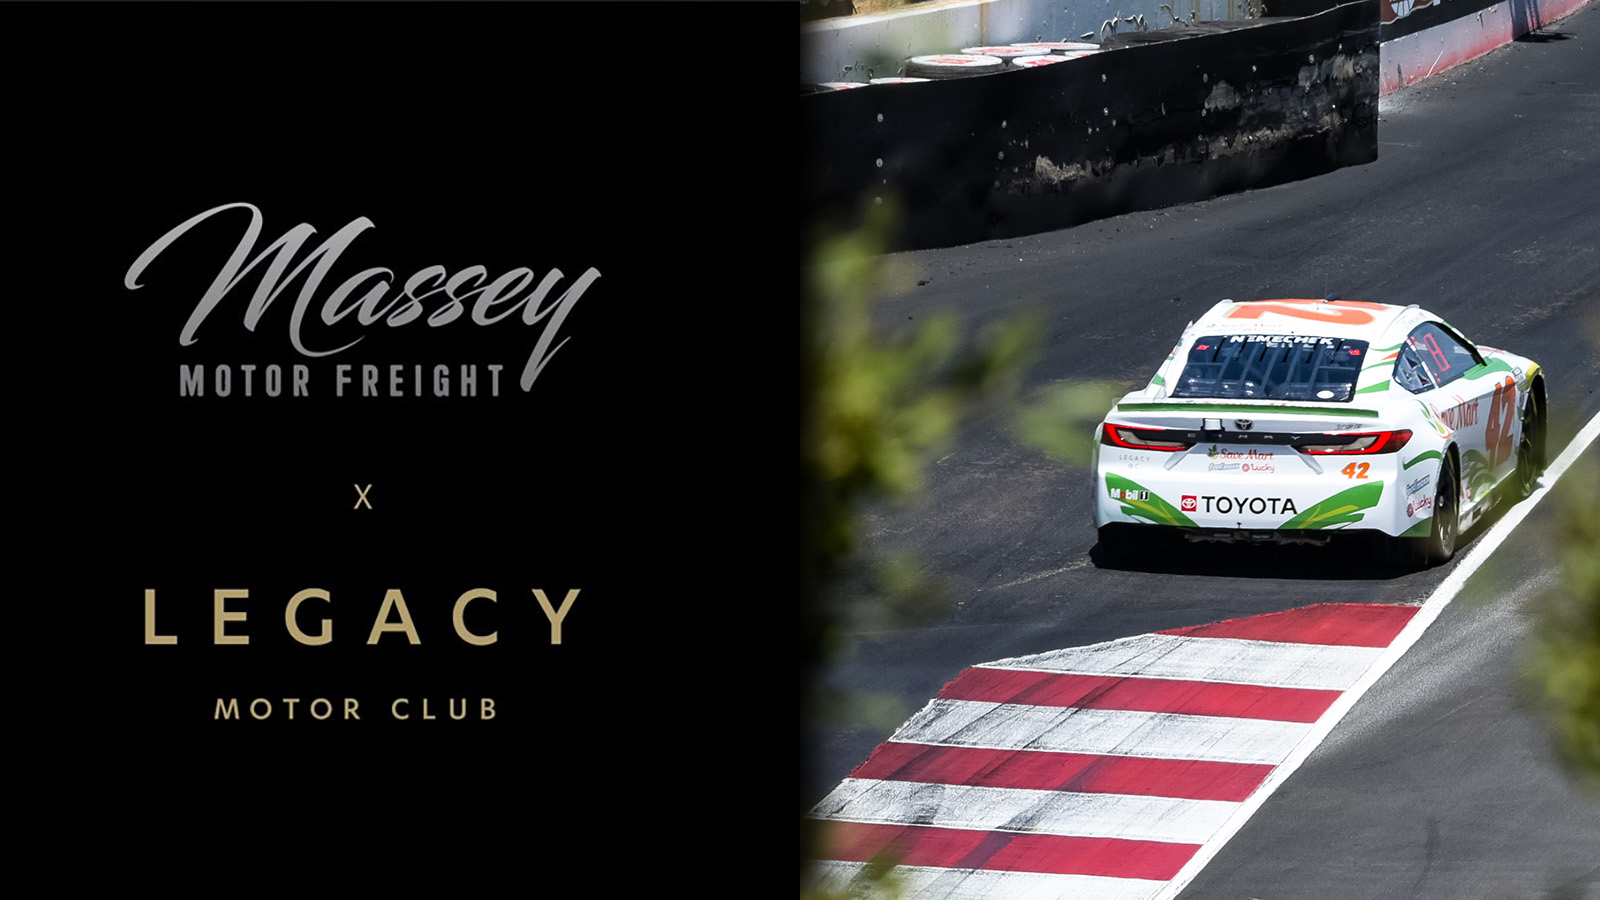 LEGACY MOTOR CLUB Massey Motor Freight sponsorship announcement multi-year